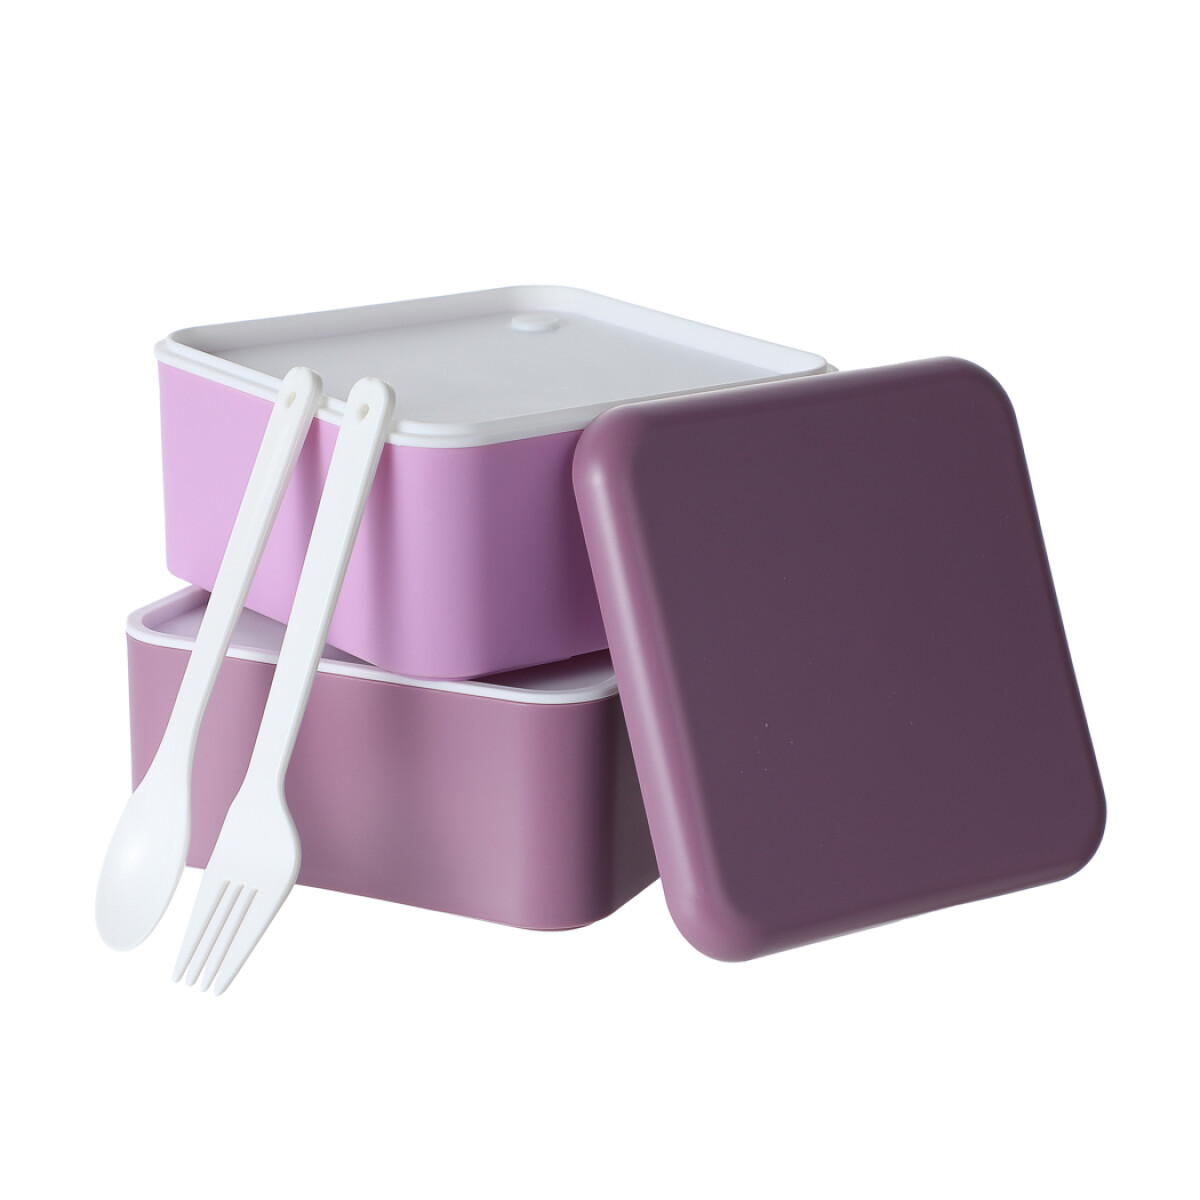 Bento box doble piso - violeta 